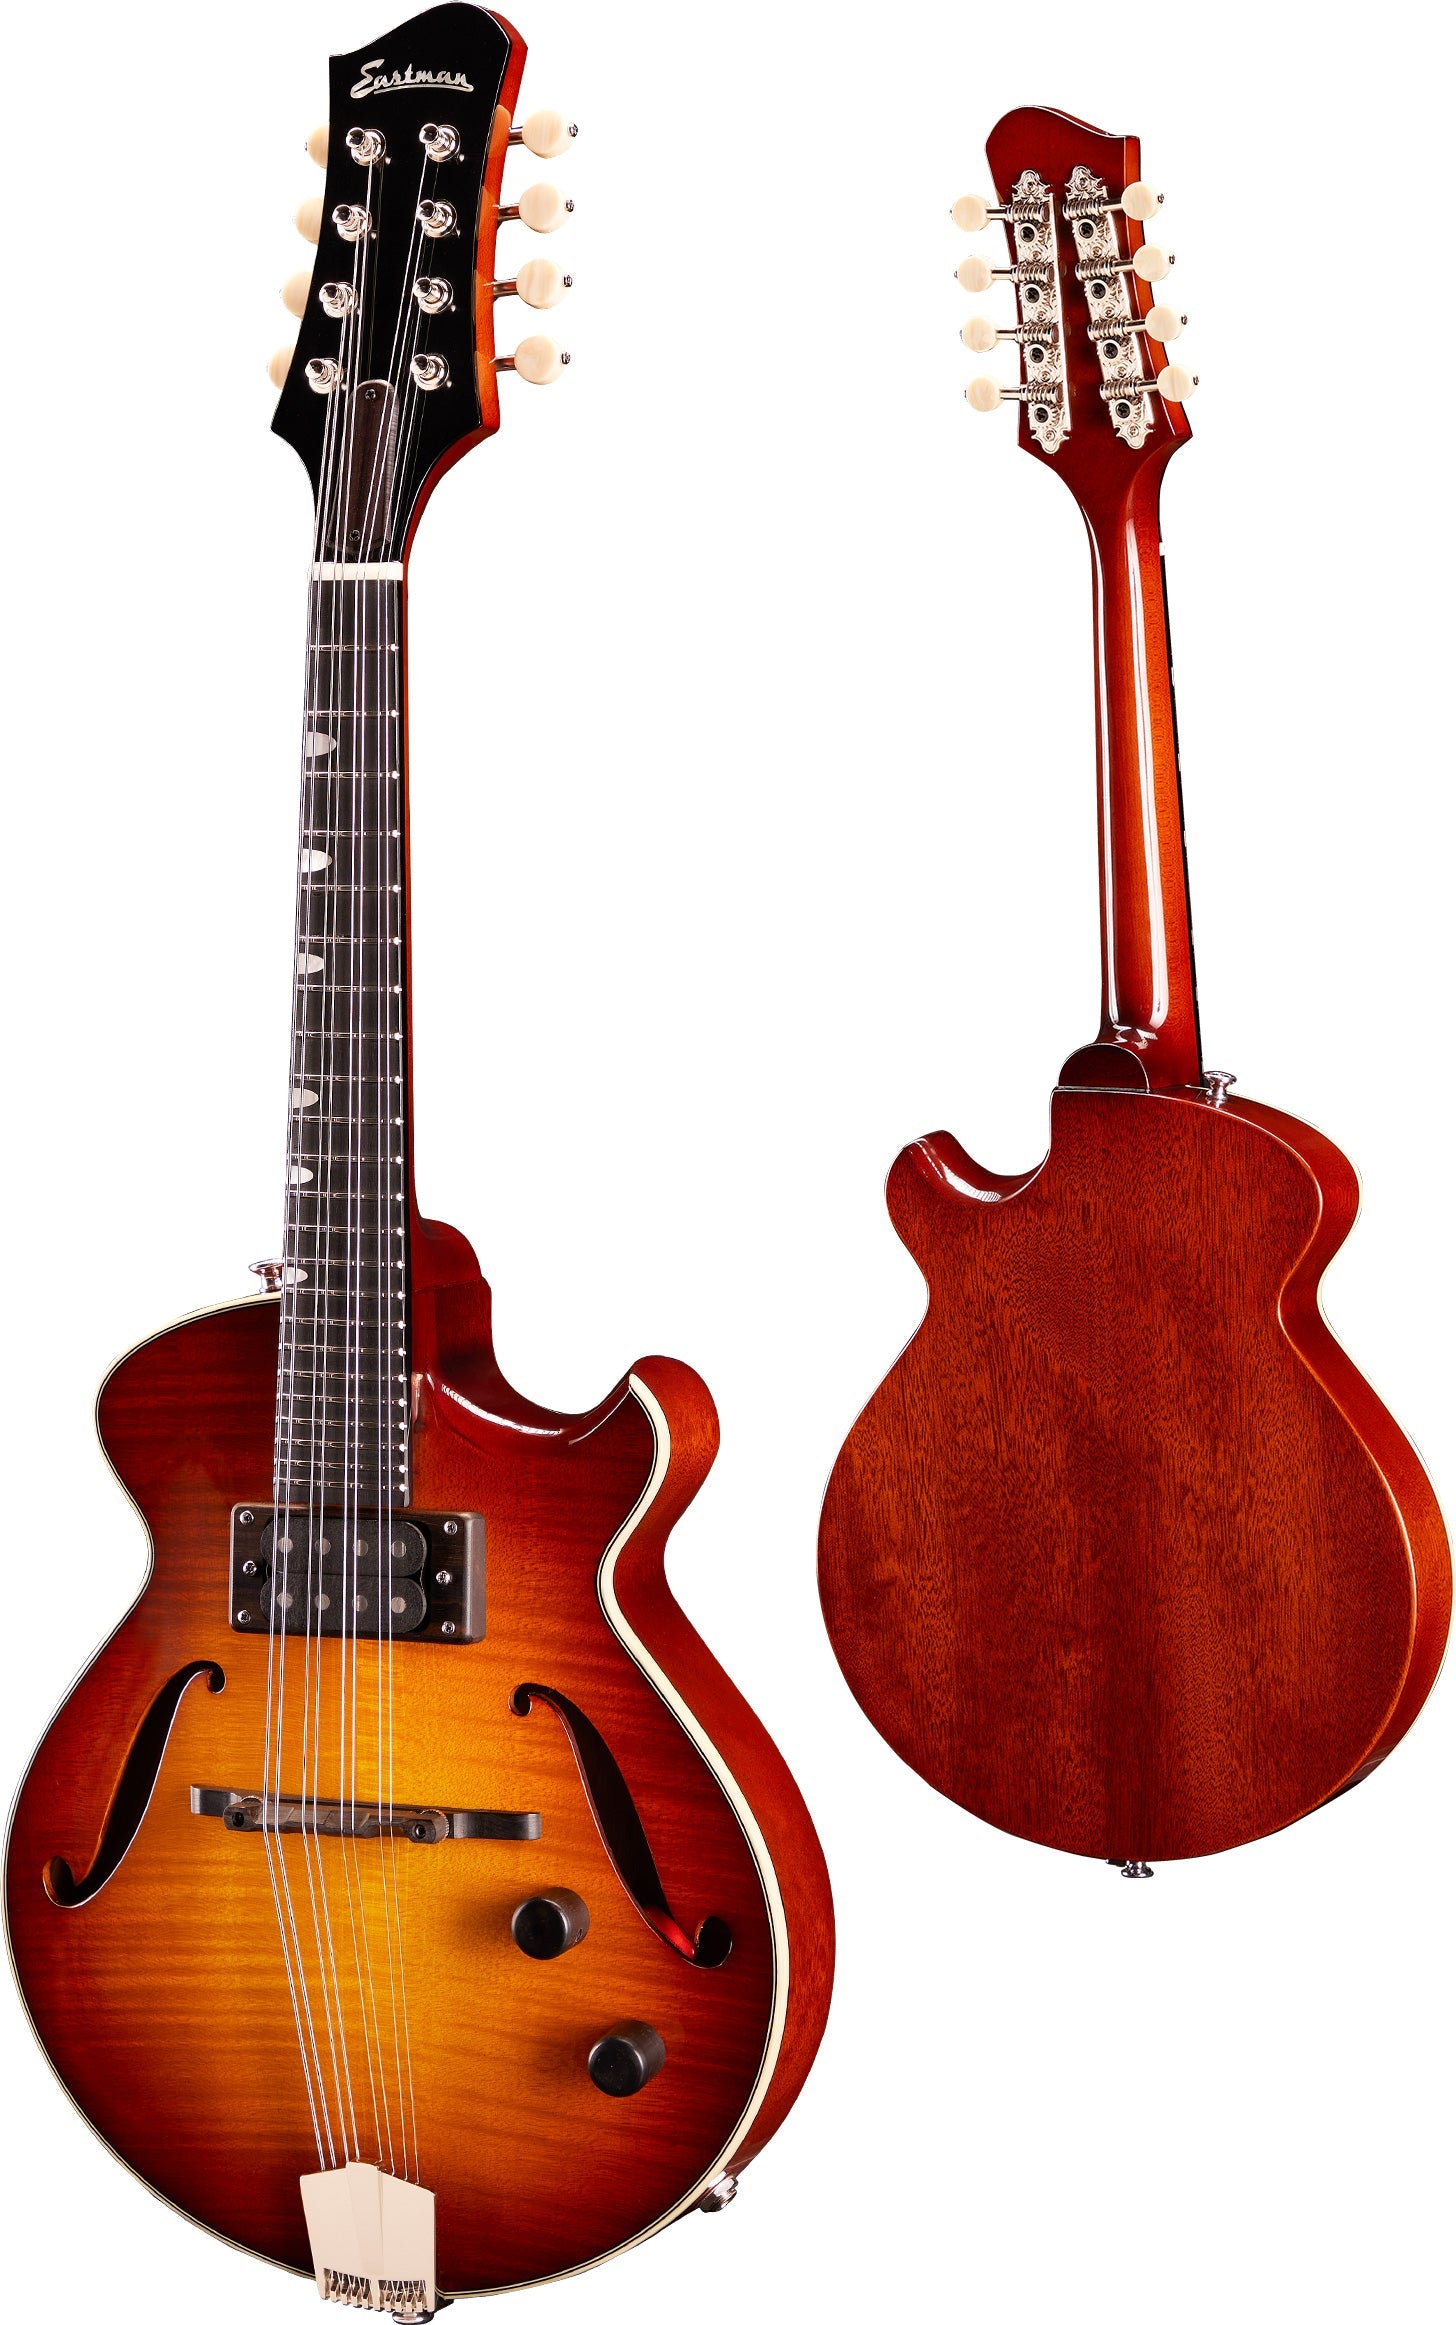 Eastman El Ray ER-M-GB Mandolin, Mandolin for sale at Richards Guitars.